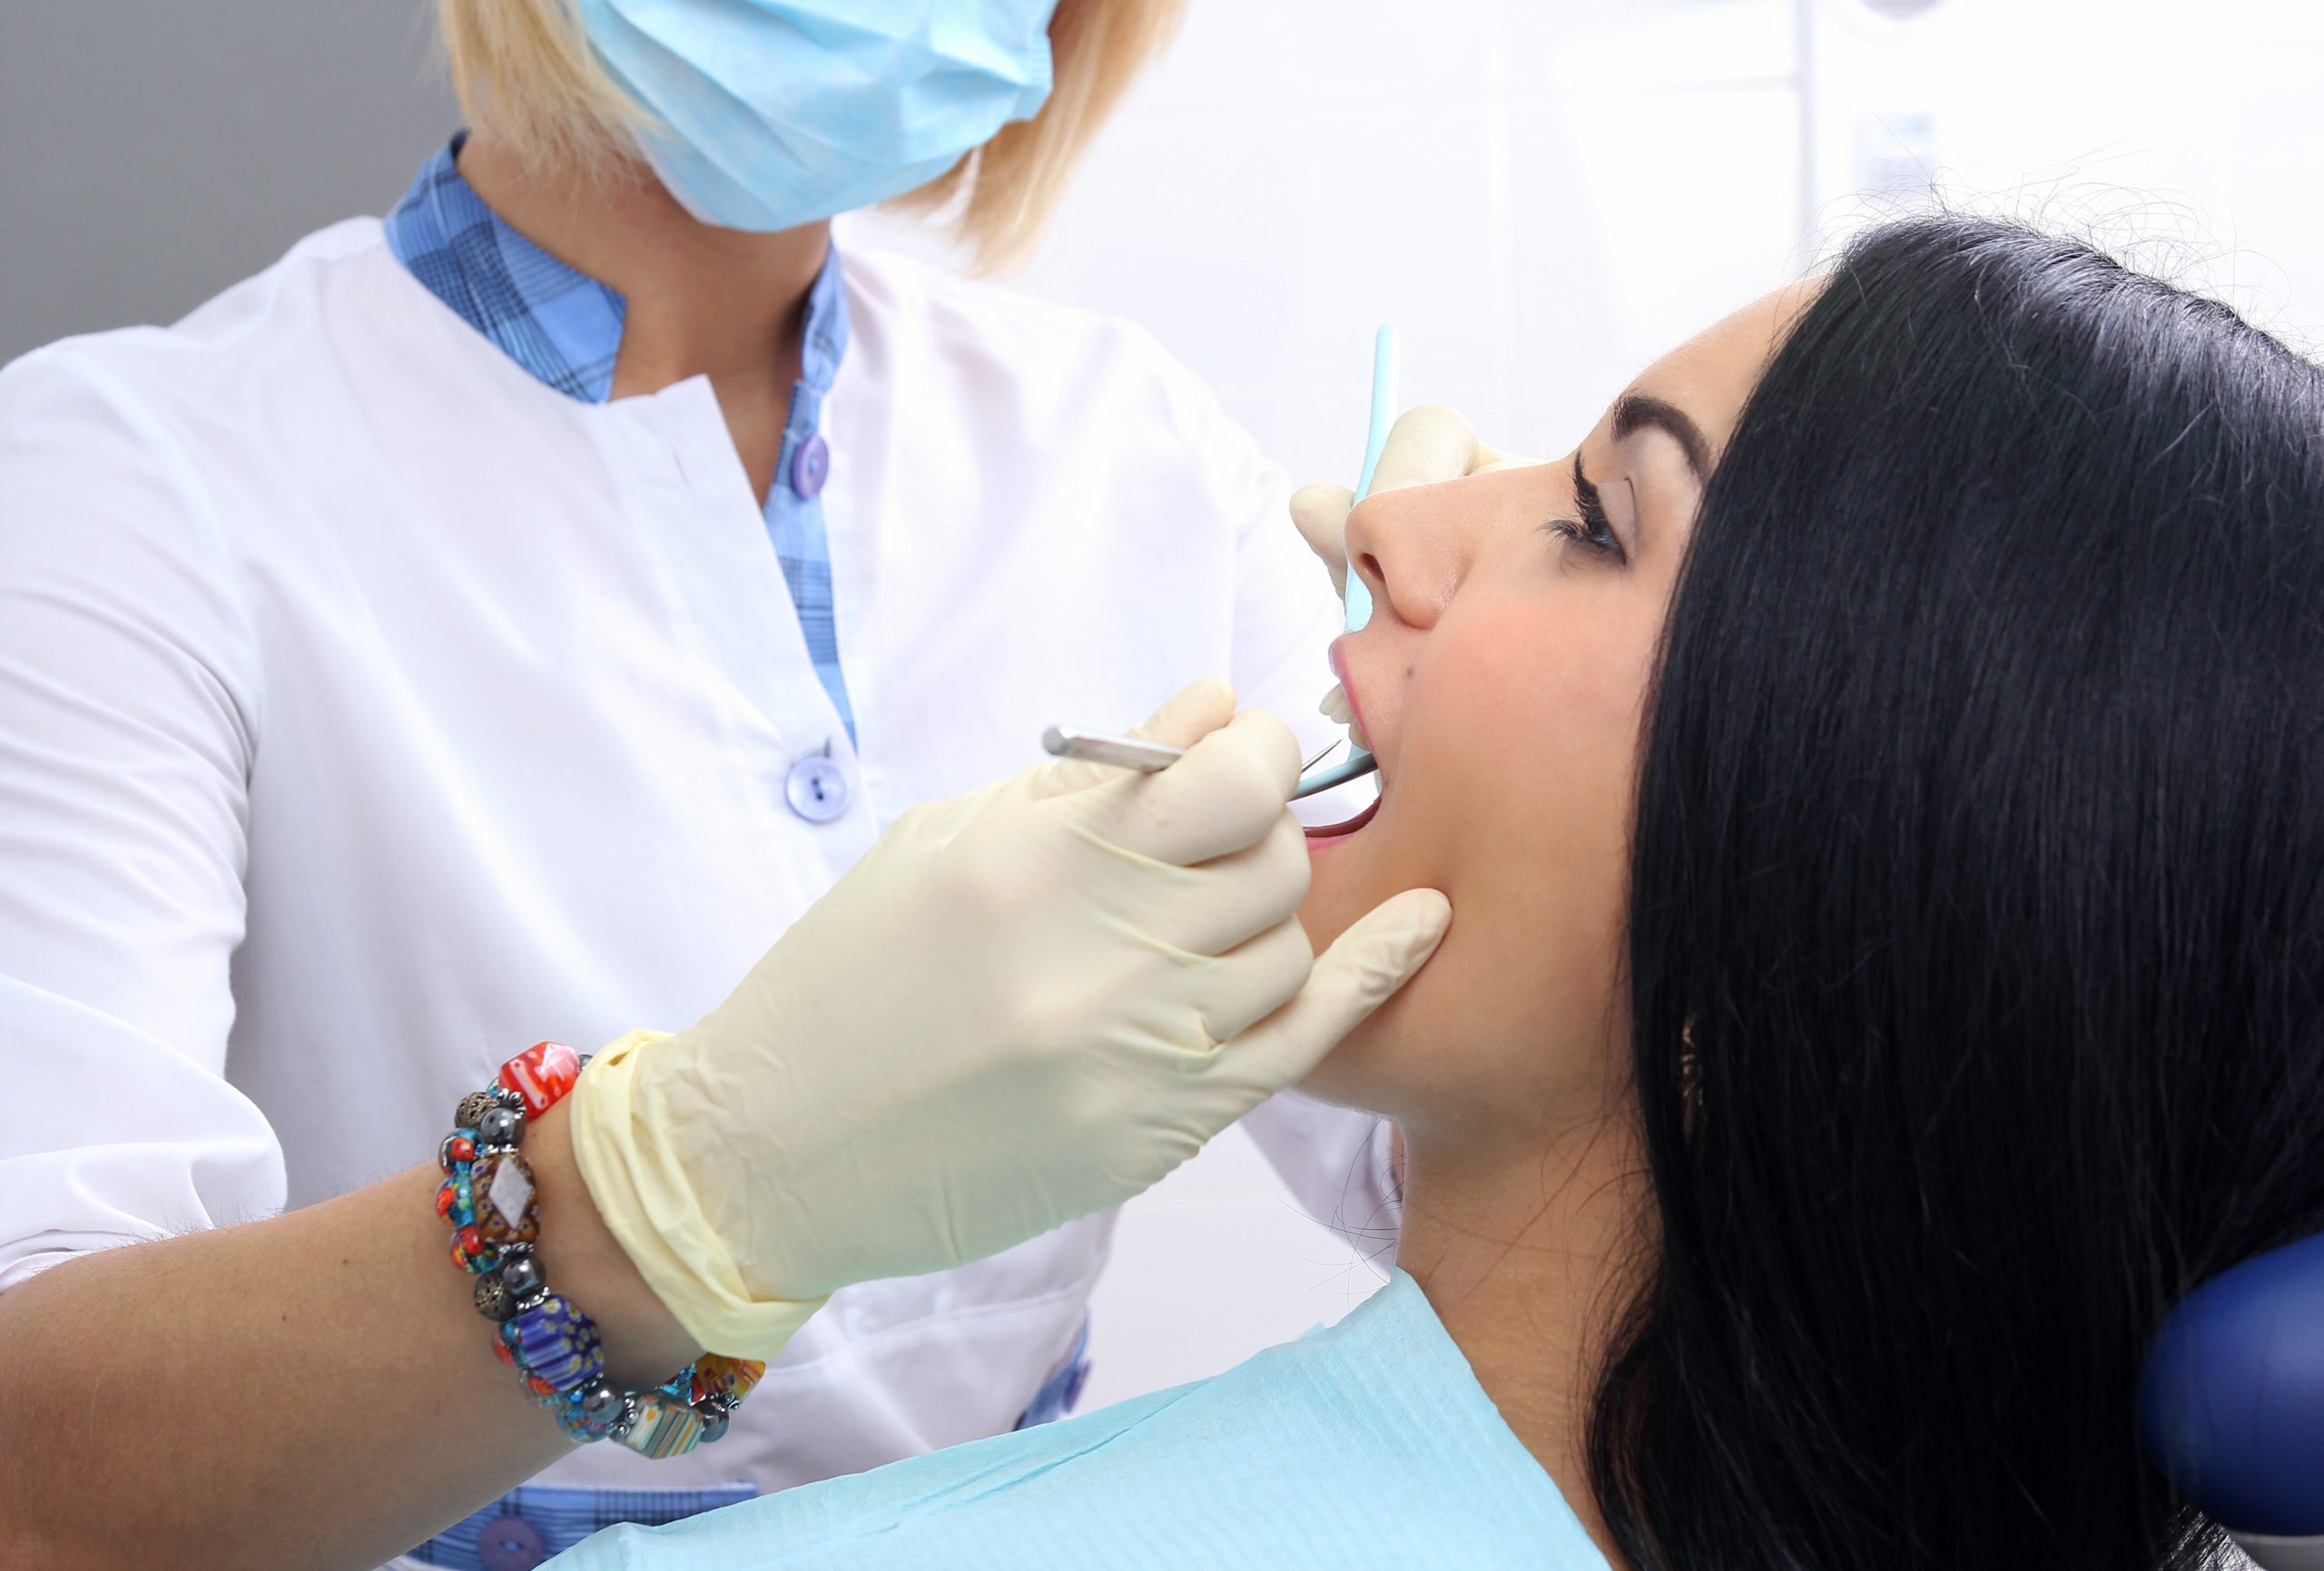 Examining a patient's teeth